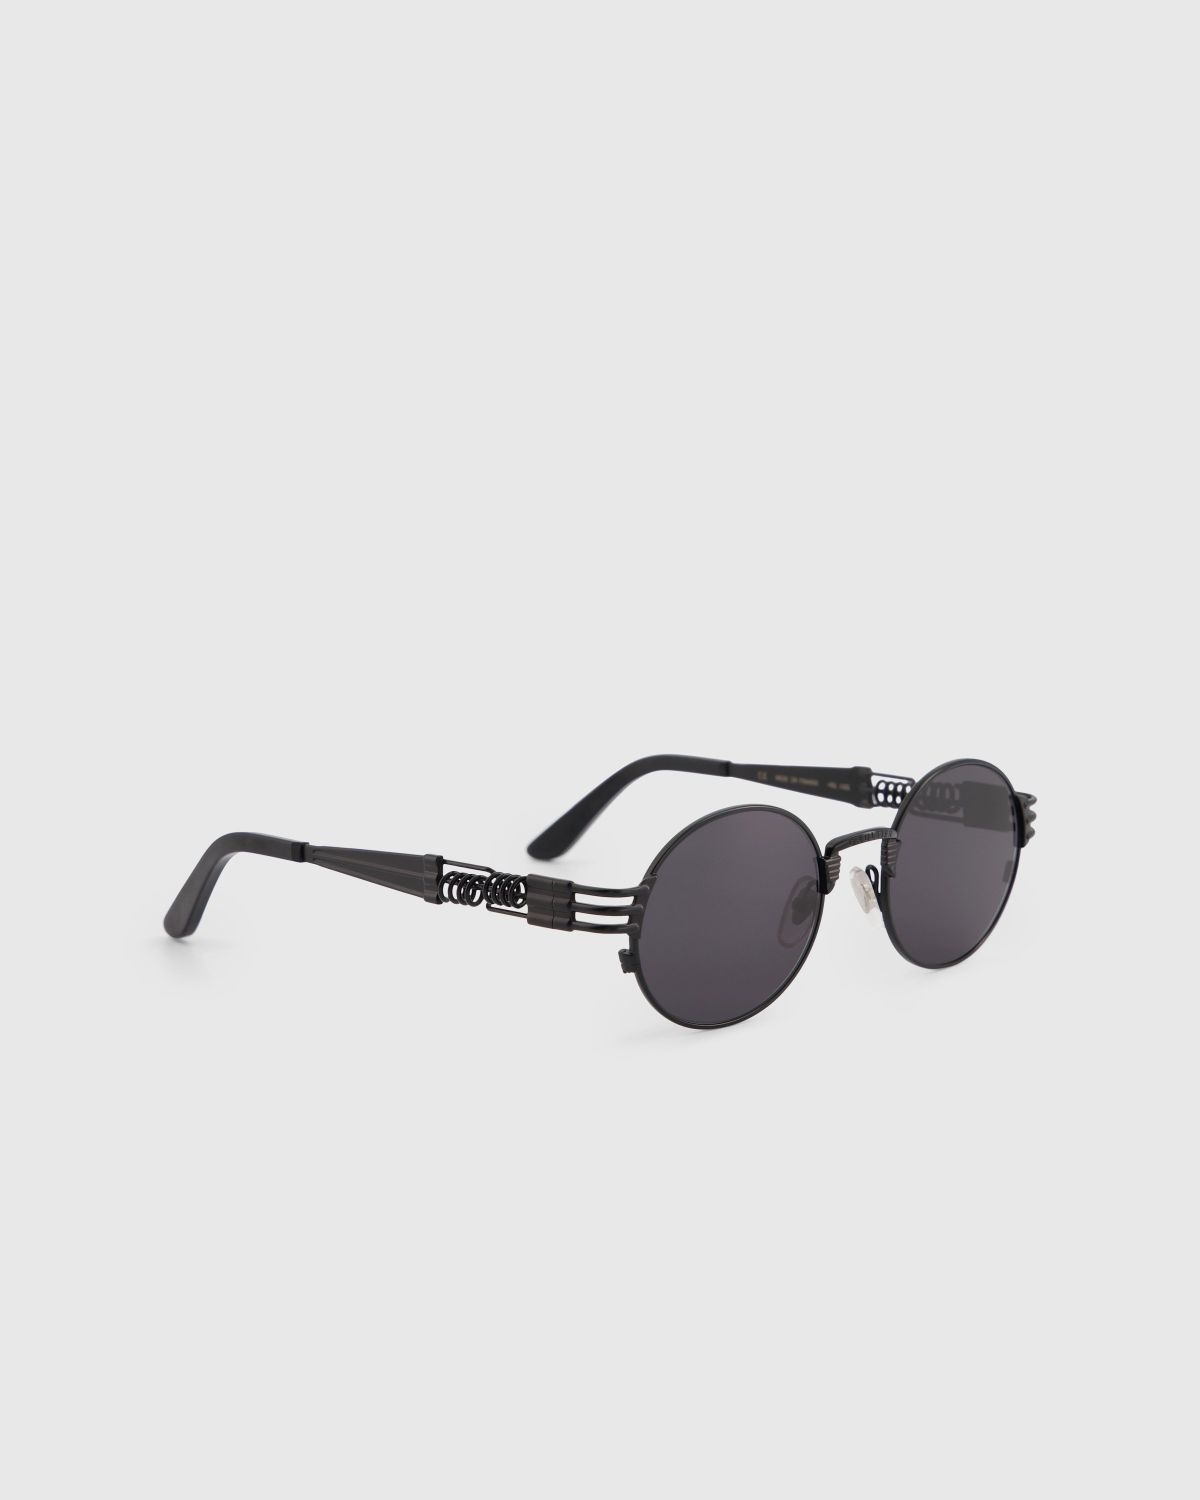 Jean Paul Gaultier x Burna Boy – 56-6106 Double Resort Sunglasses Black - 2